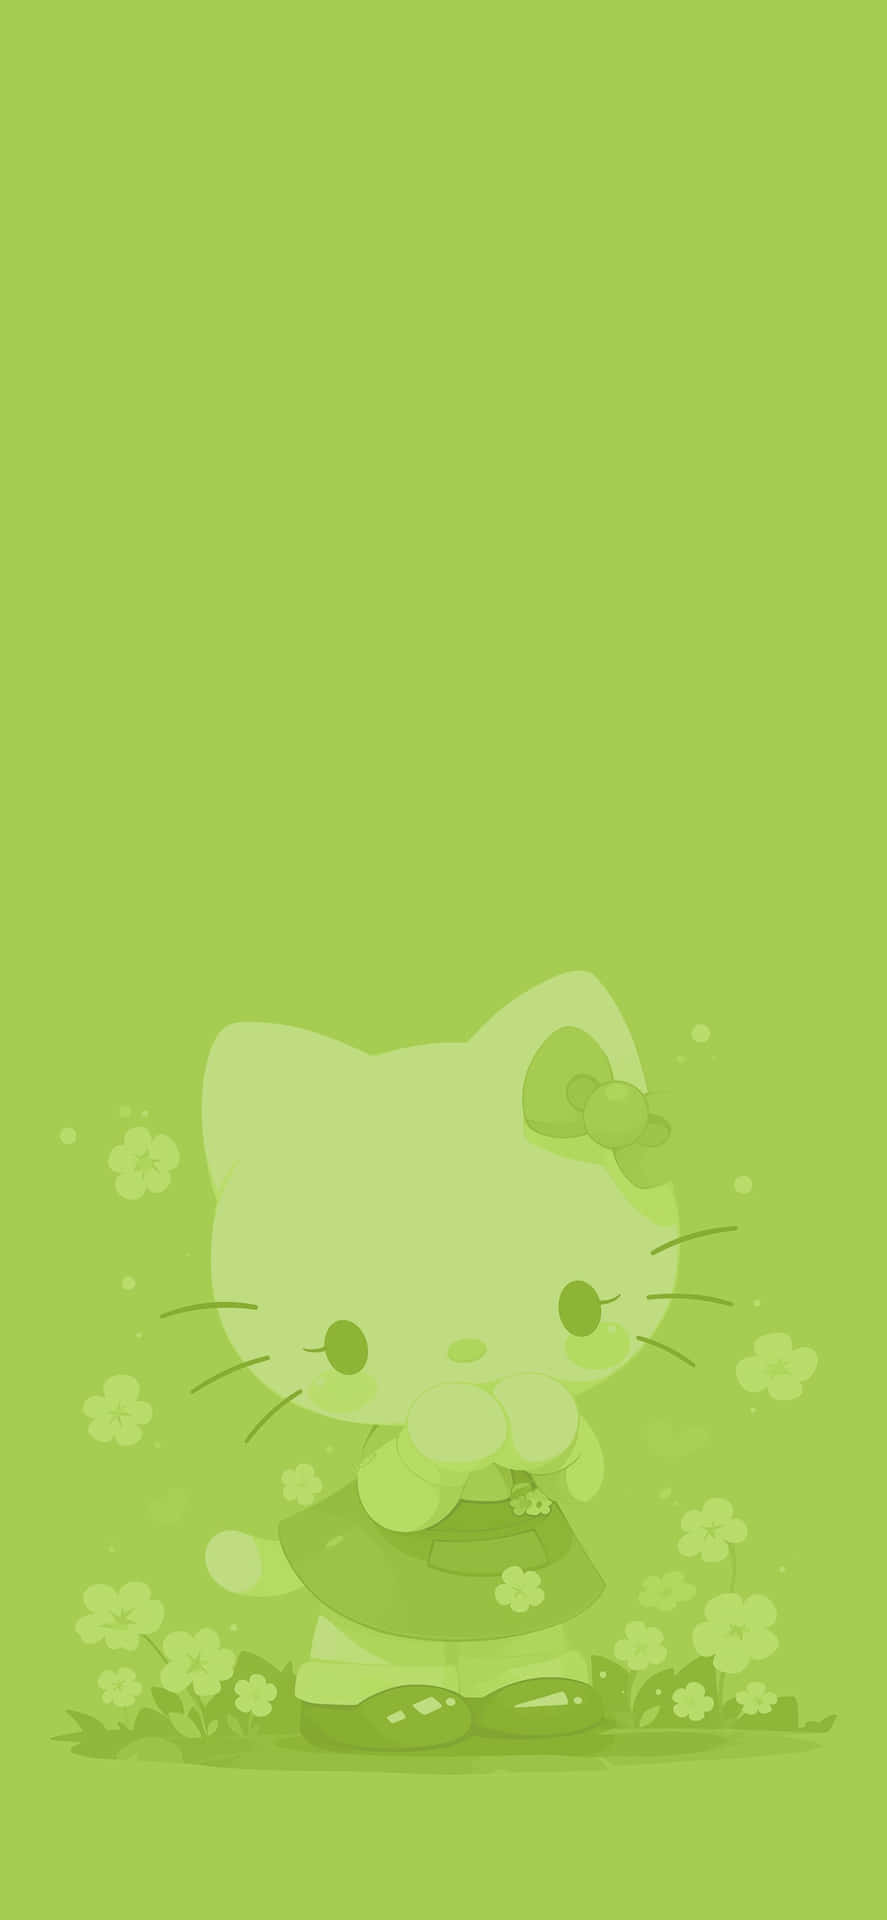 Green Hello Kittyi Phone Wallpaper Wallpaper